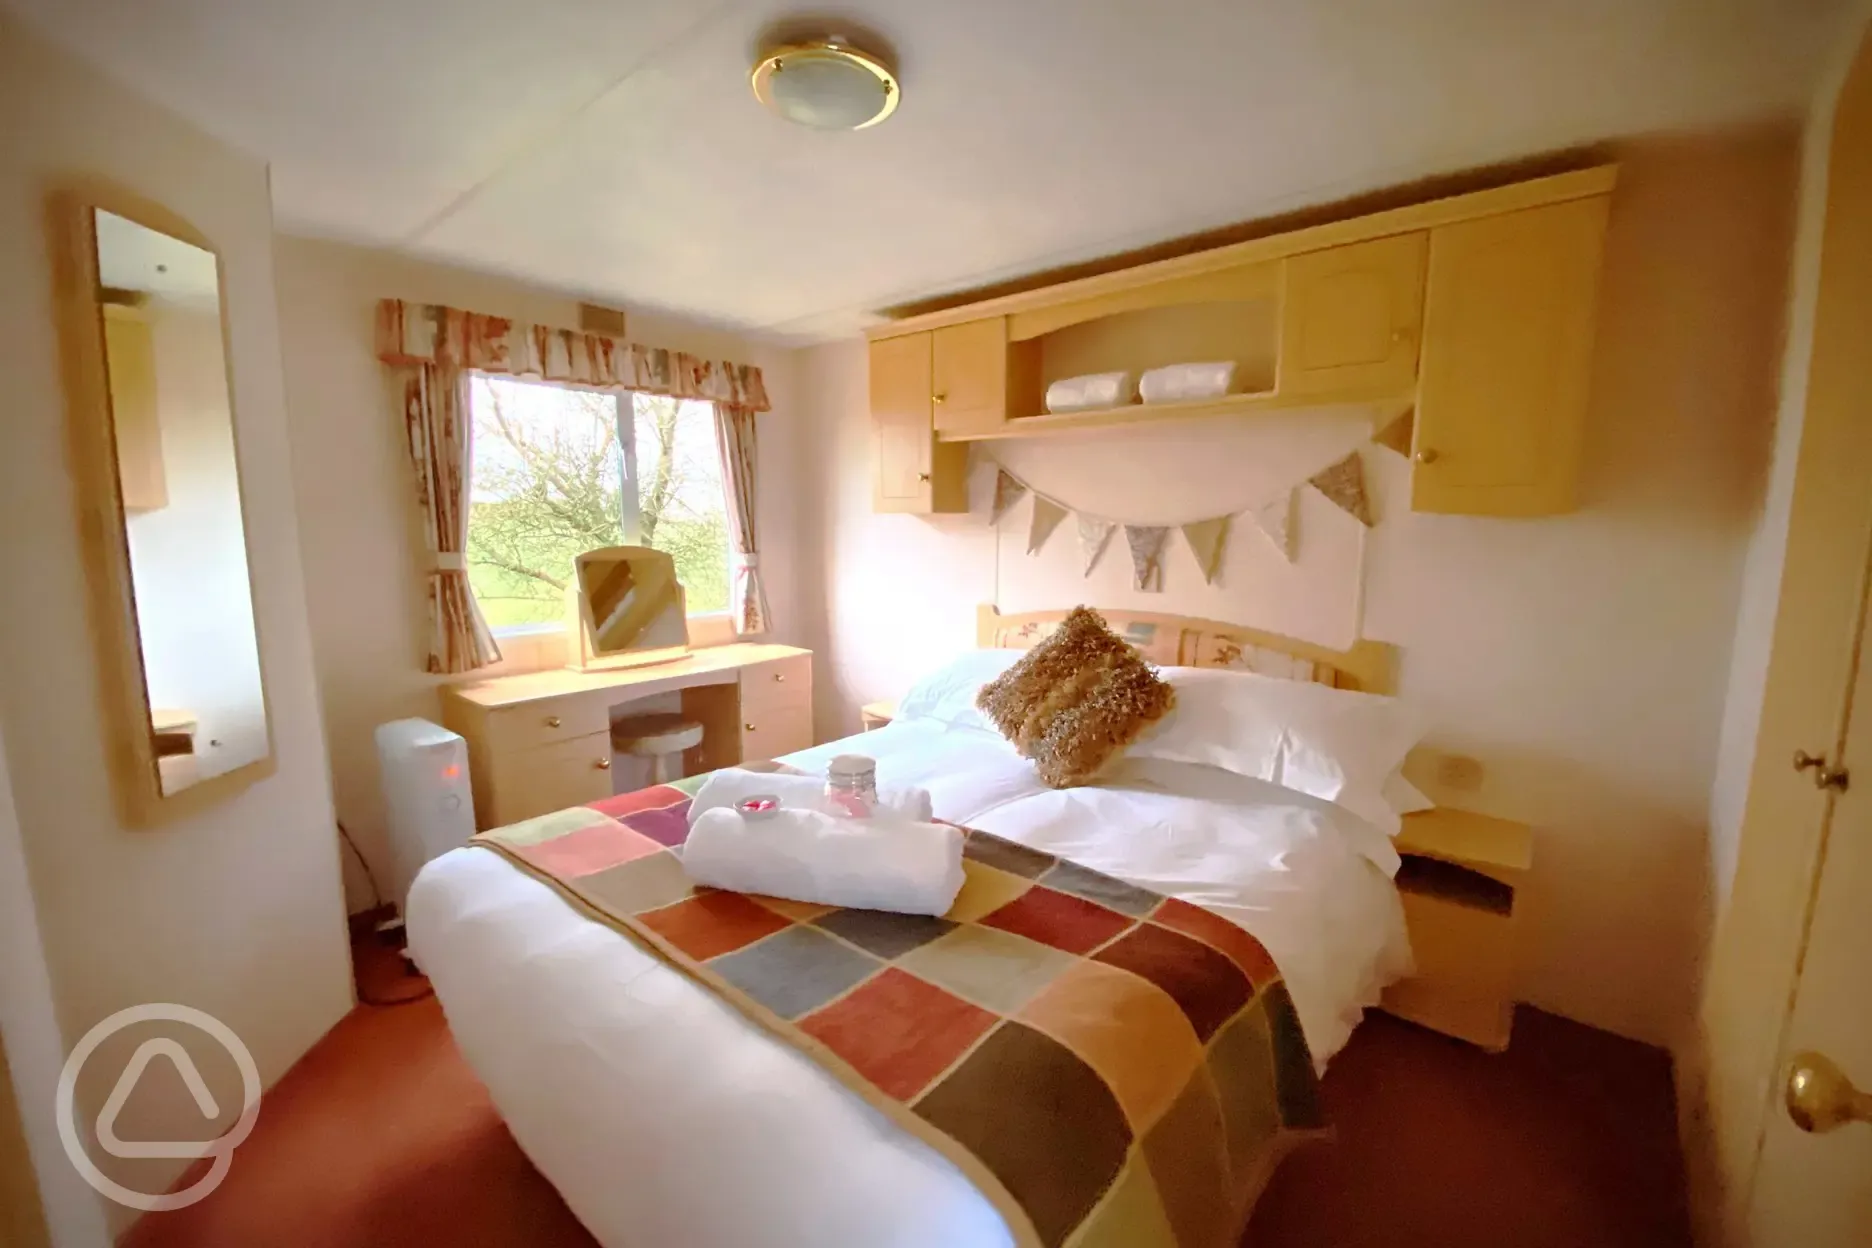 The Beach Hut double bedroom